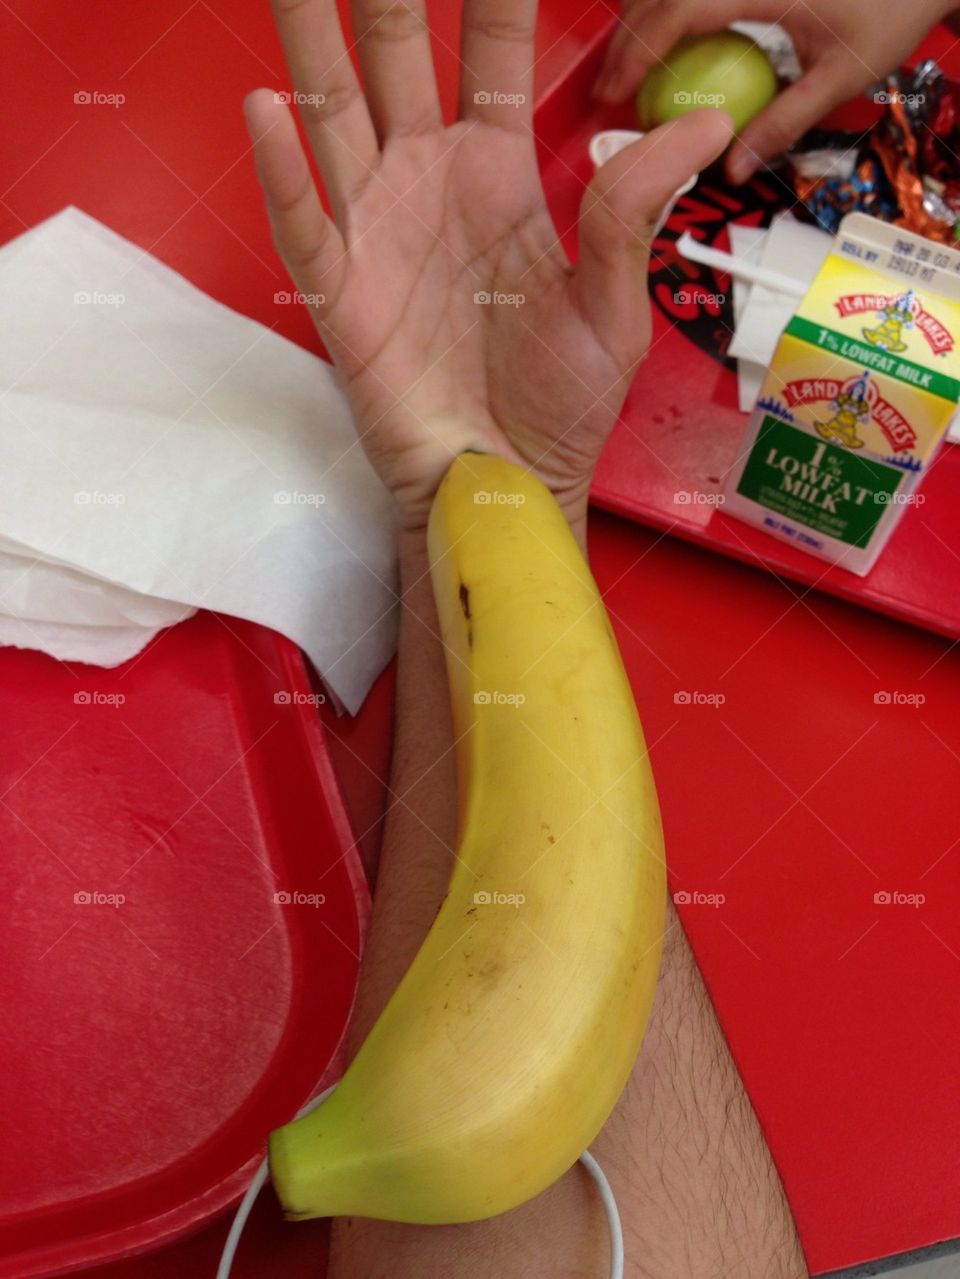 Longest banana ever